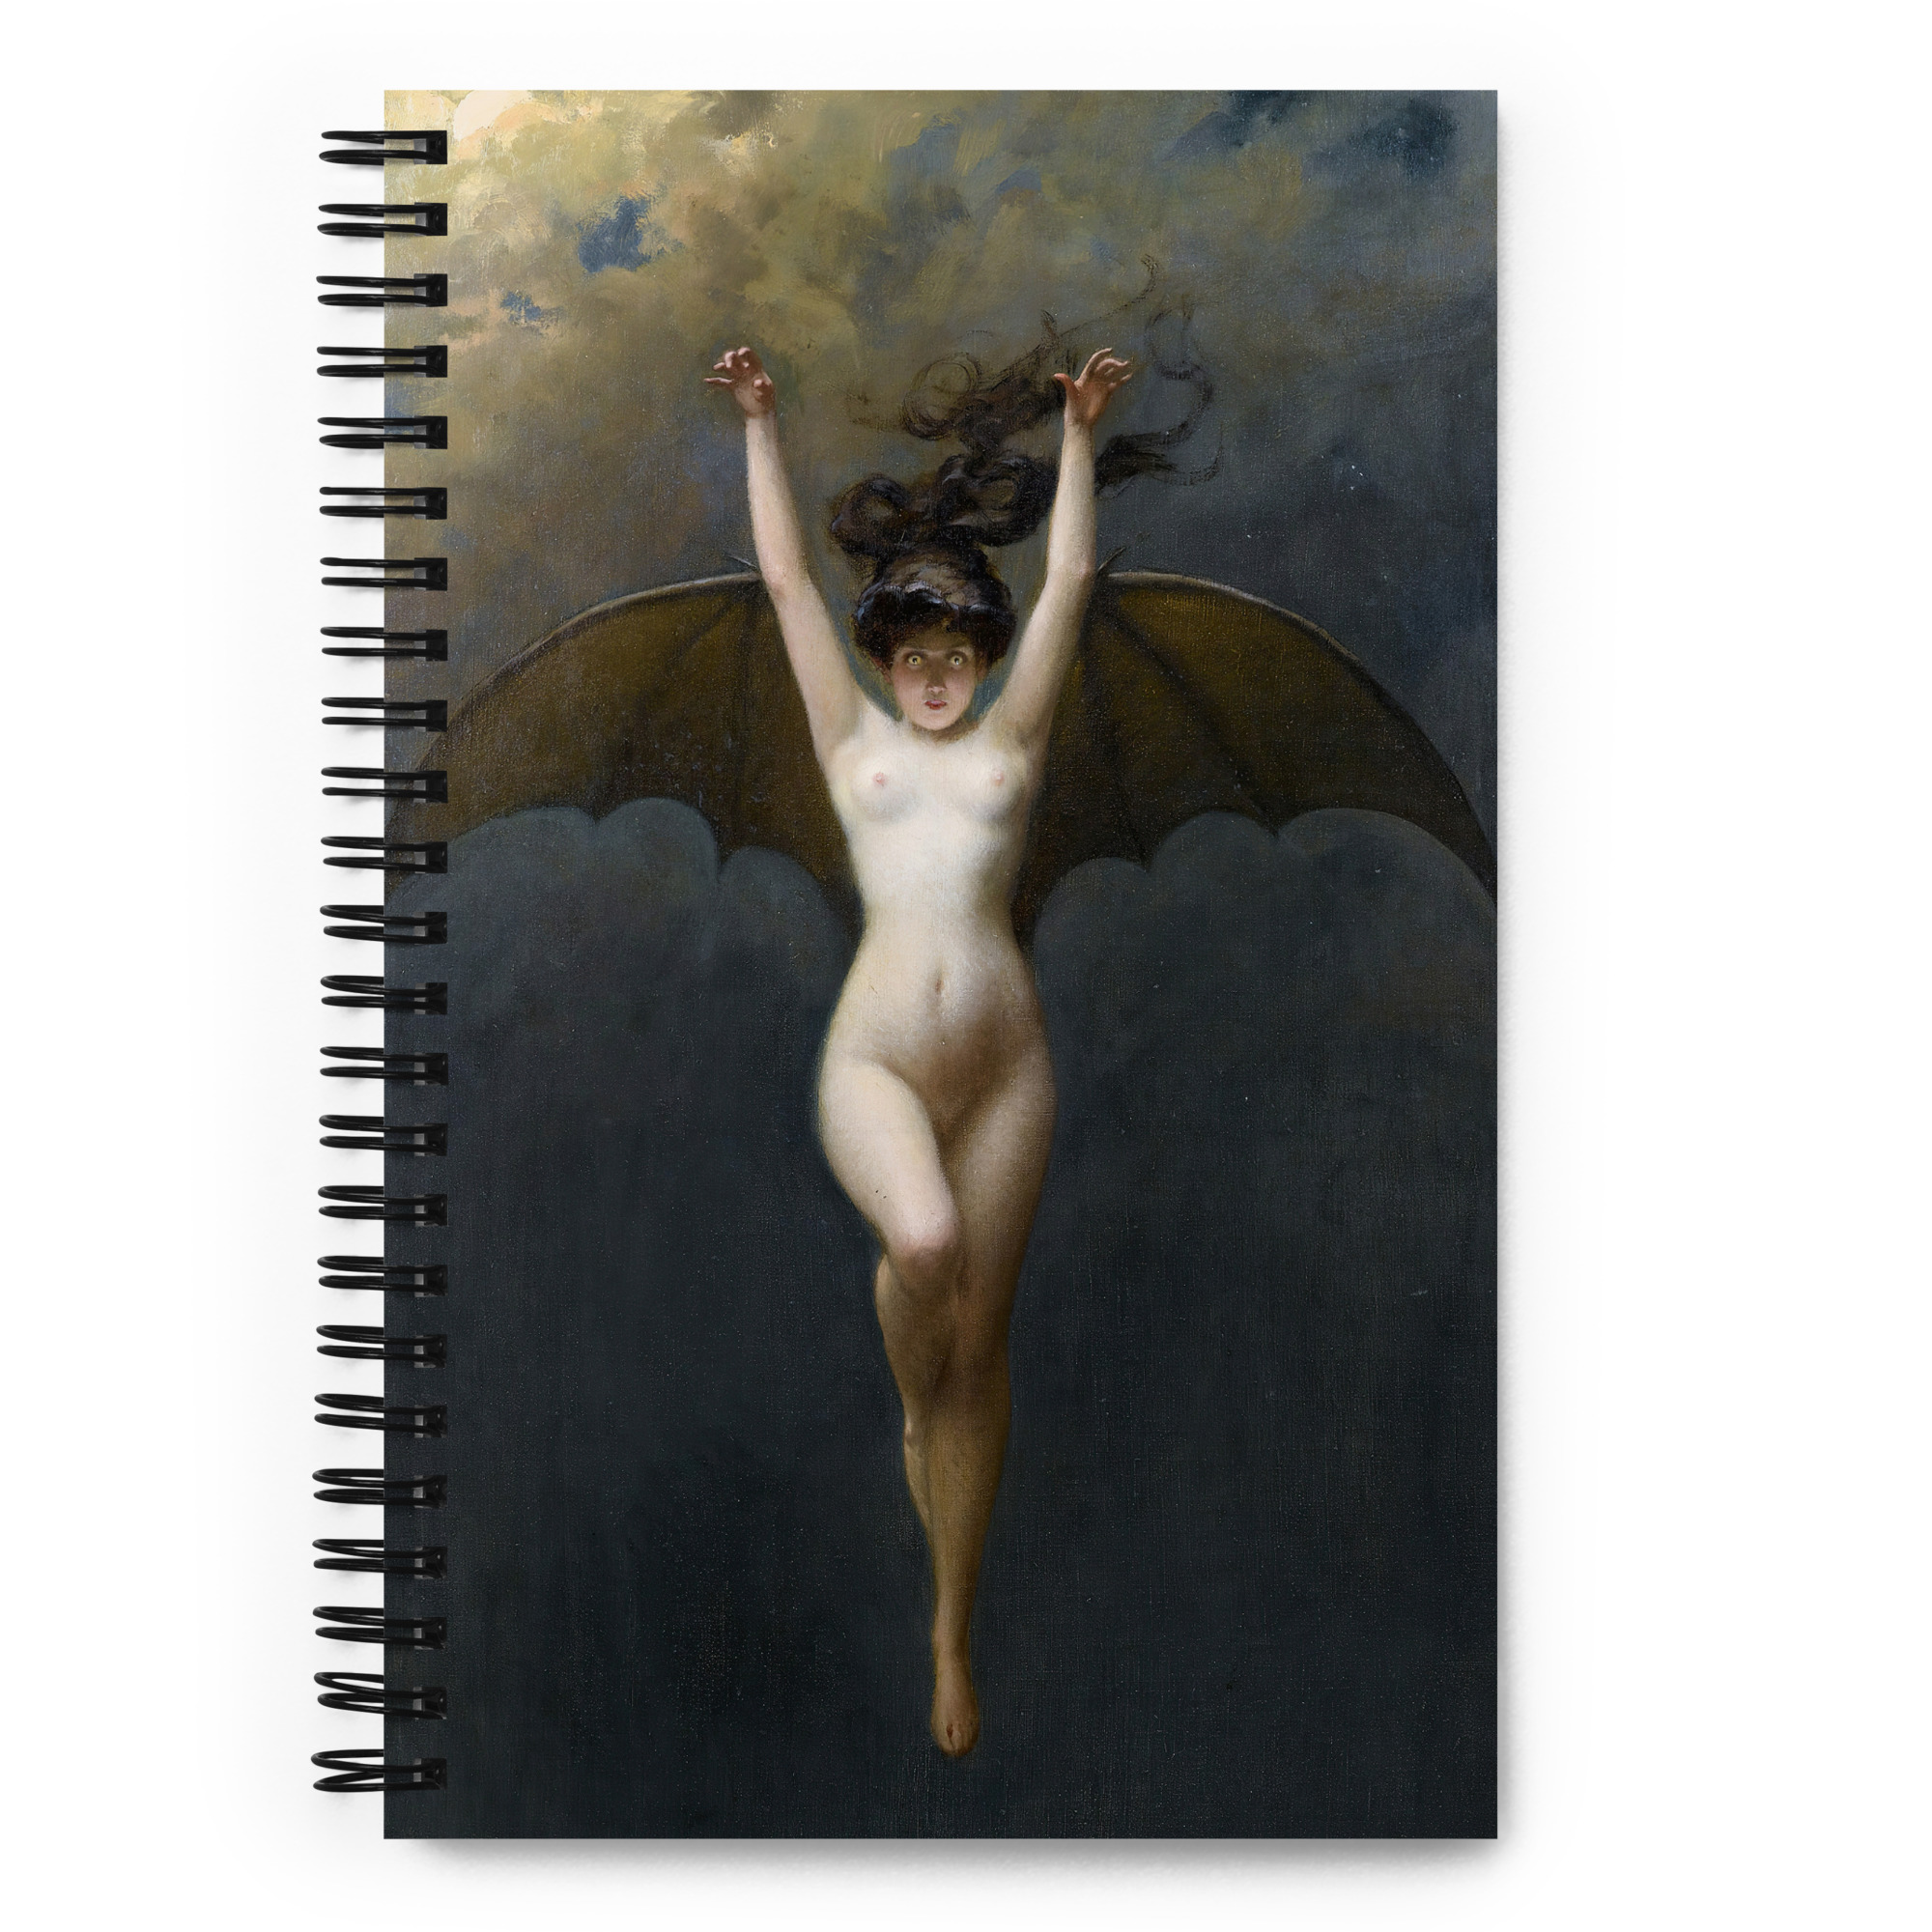 The Bat-Woman (La Femme Chauve-Souris) Spiral Notebook by Albert Joseph Pénot. Dark Academia, Gothic Art, Macabre, Wall Decor.